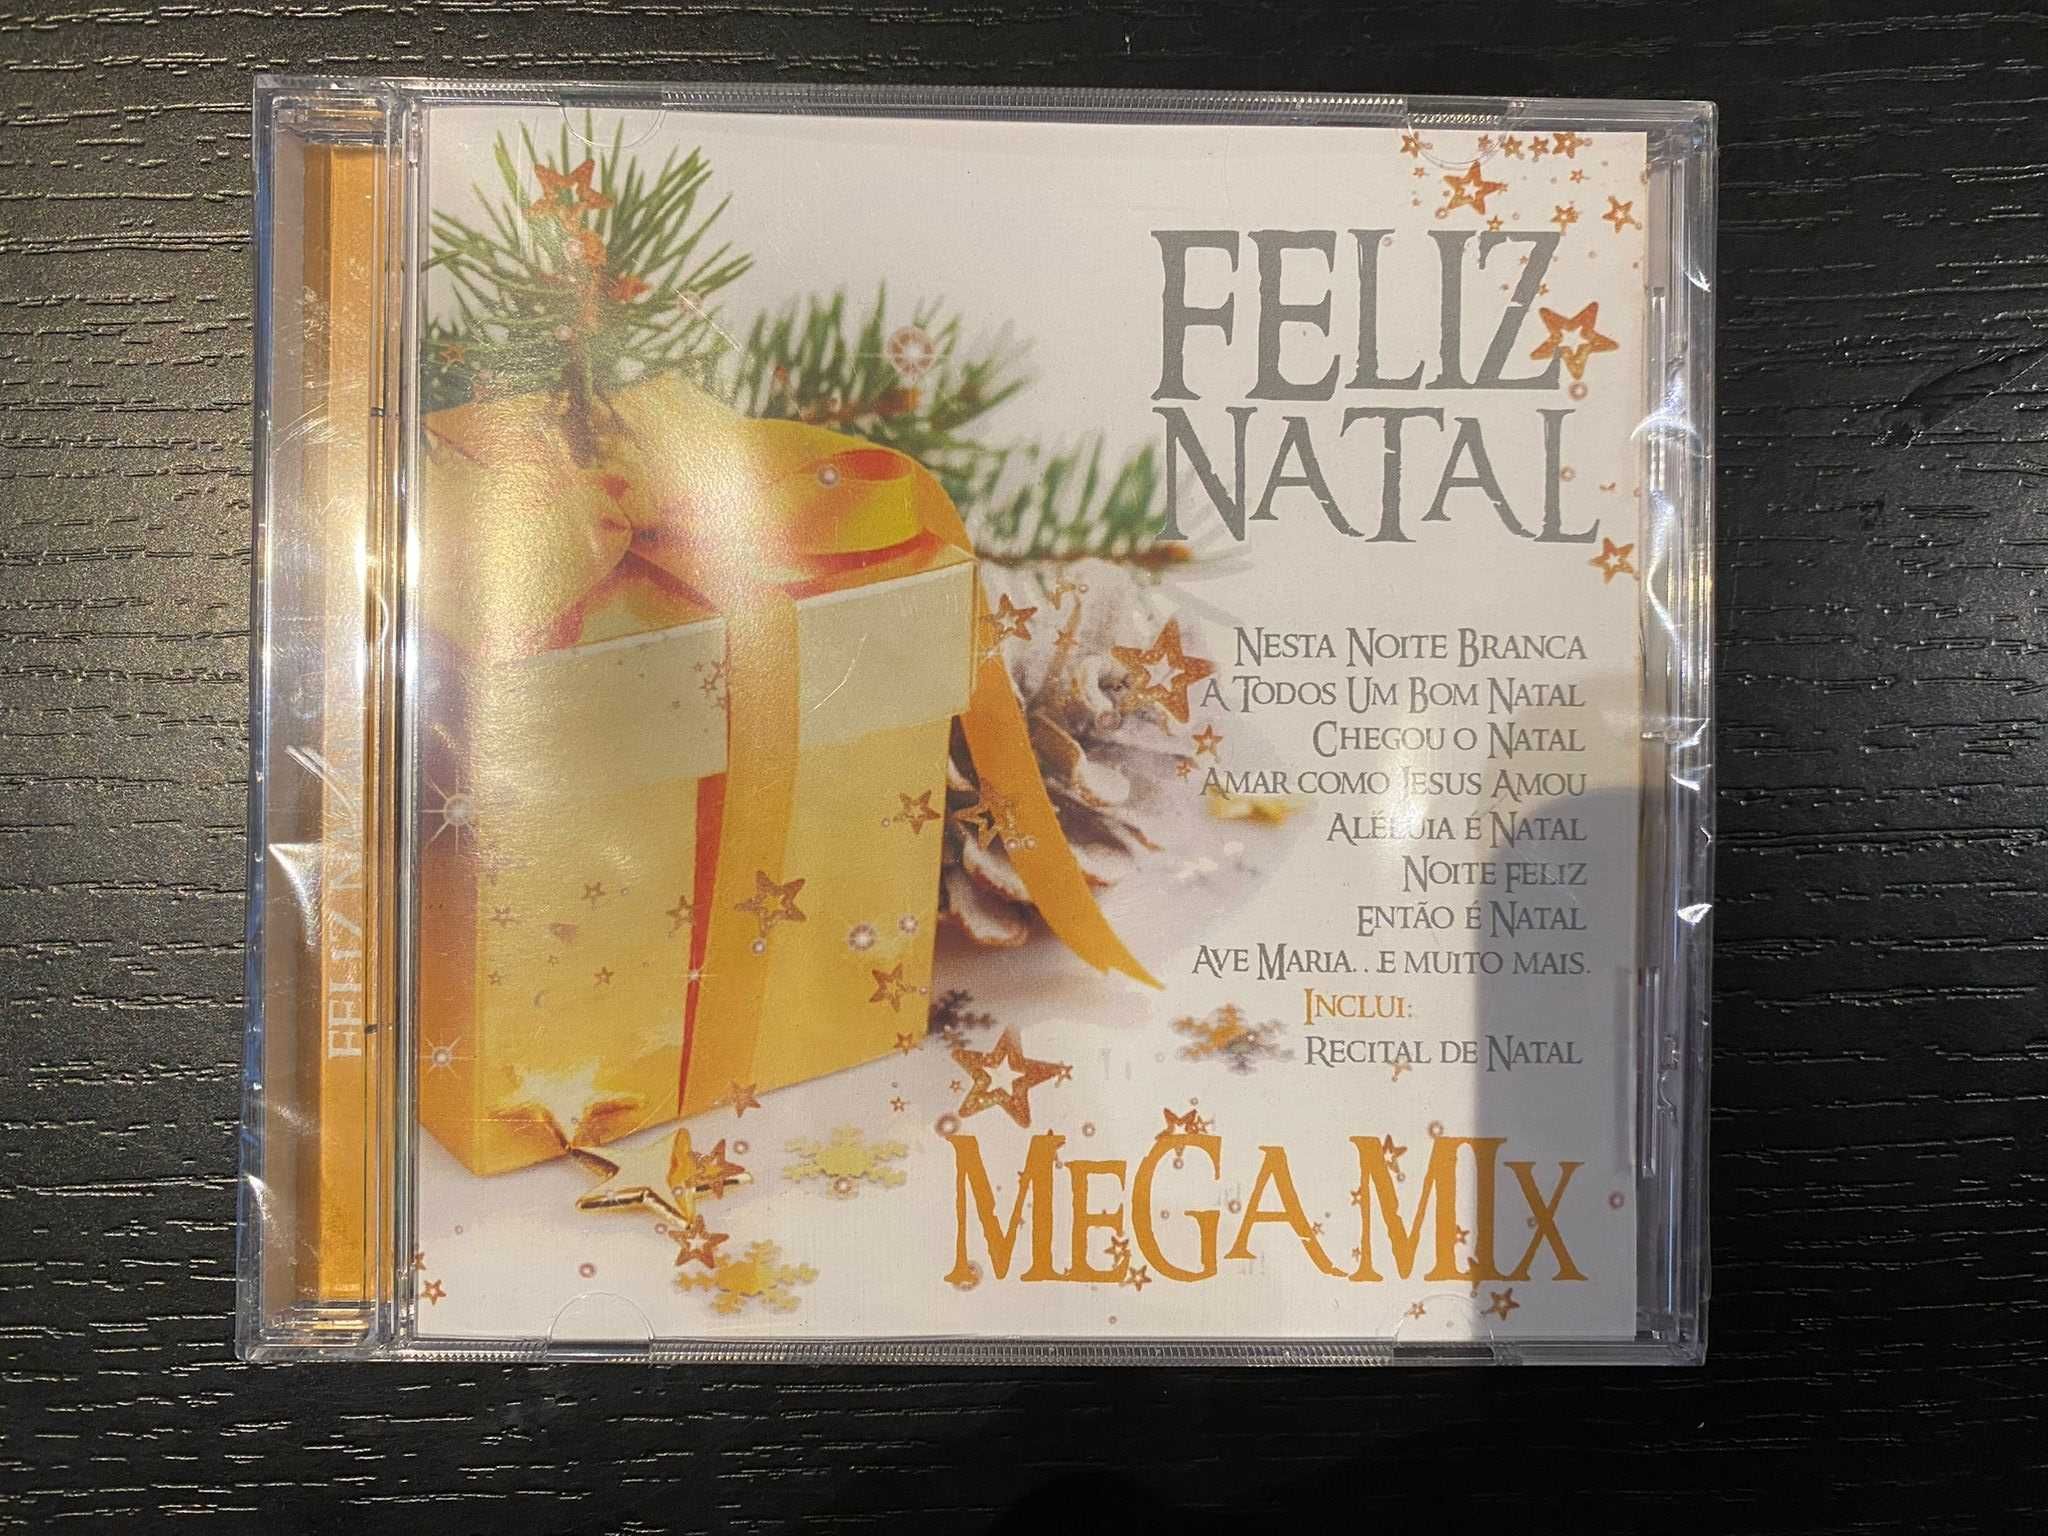 CD's de Natal/Ano Novo